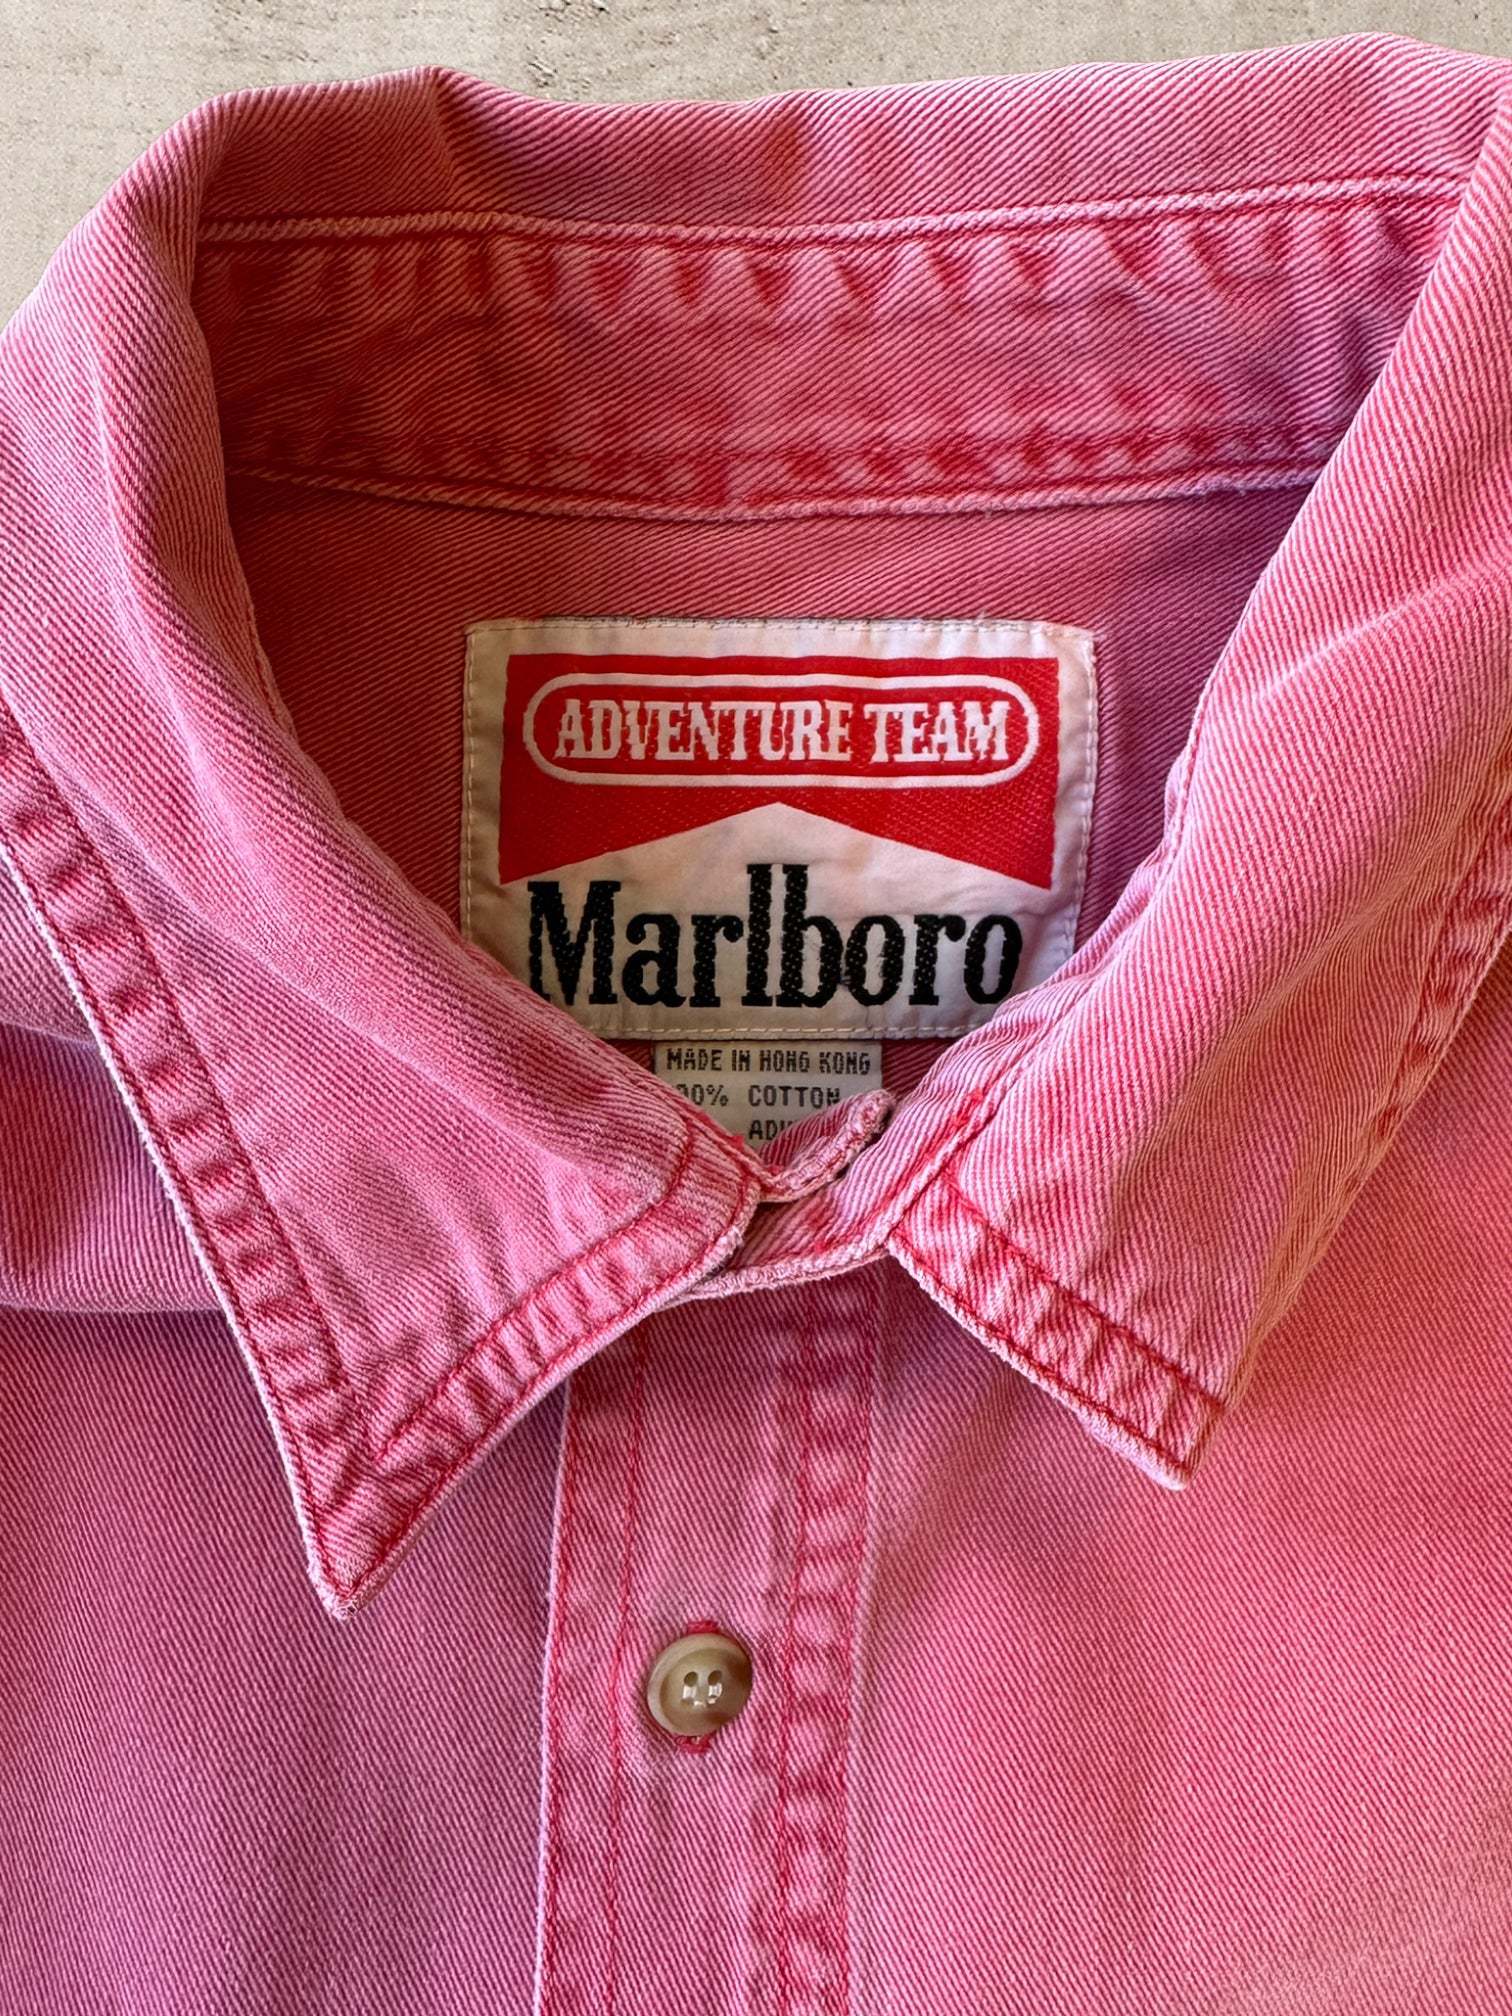 90s Marlboro Cigarettes Button Up Shirt - Large